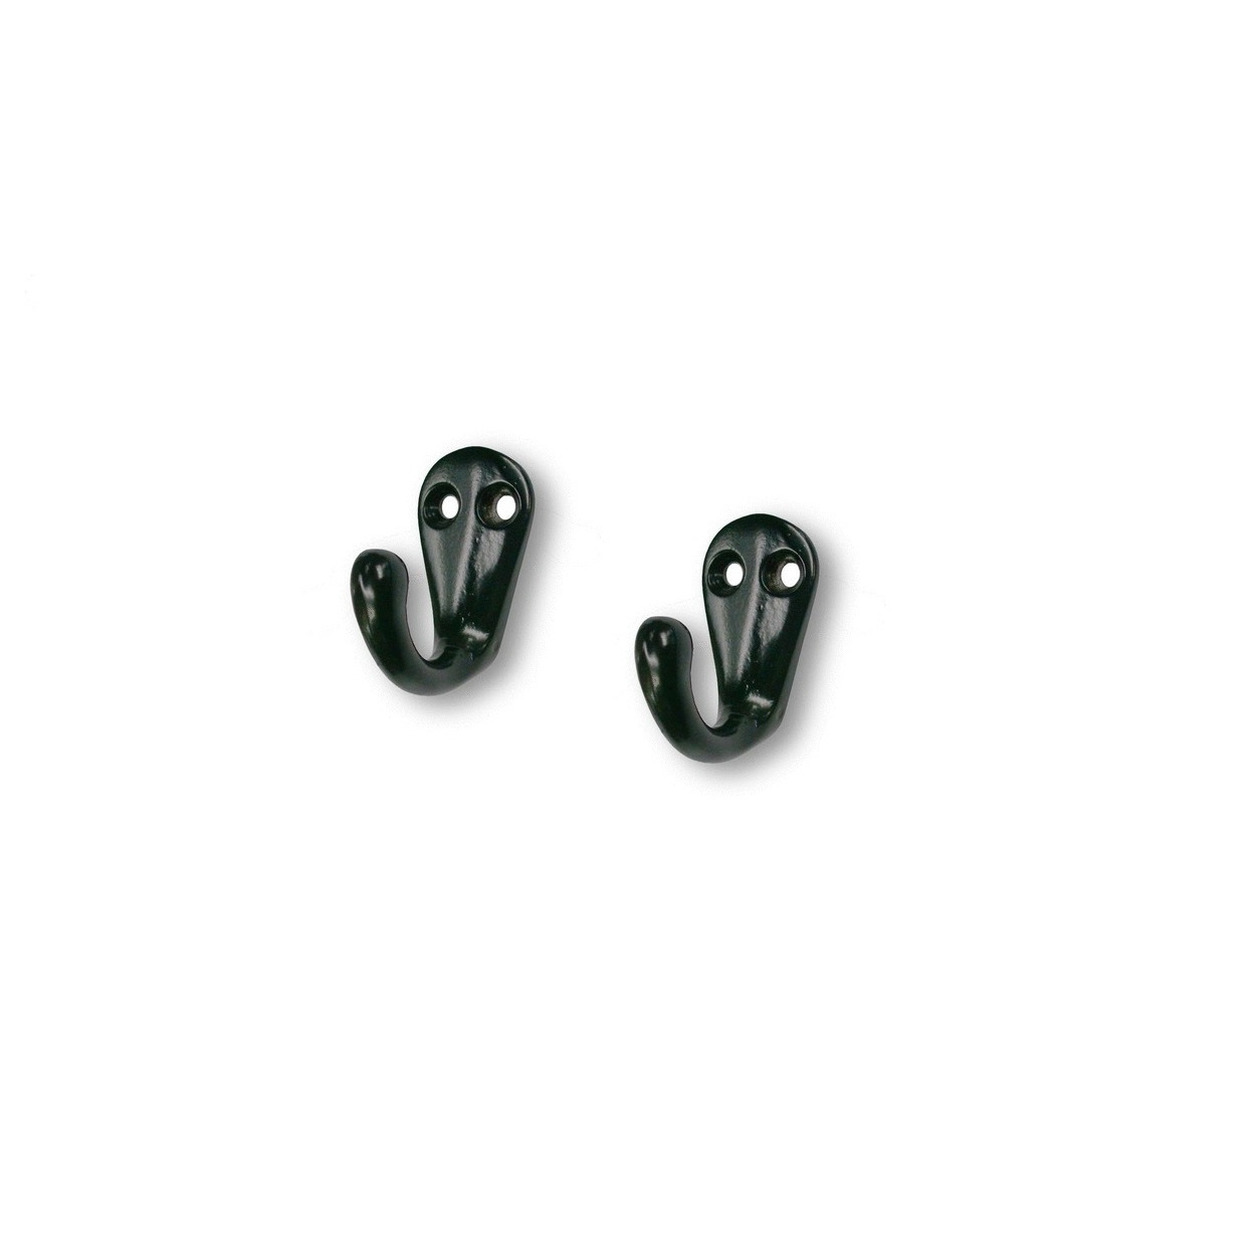 6x Luxe kapstokhaken-jashaken-kapstokhaakjes zwart van hoogwaardig metaal 3,3 x 4,1 cm